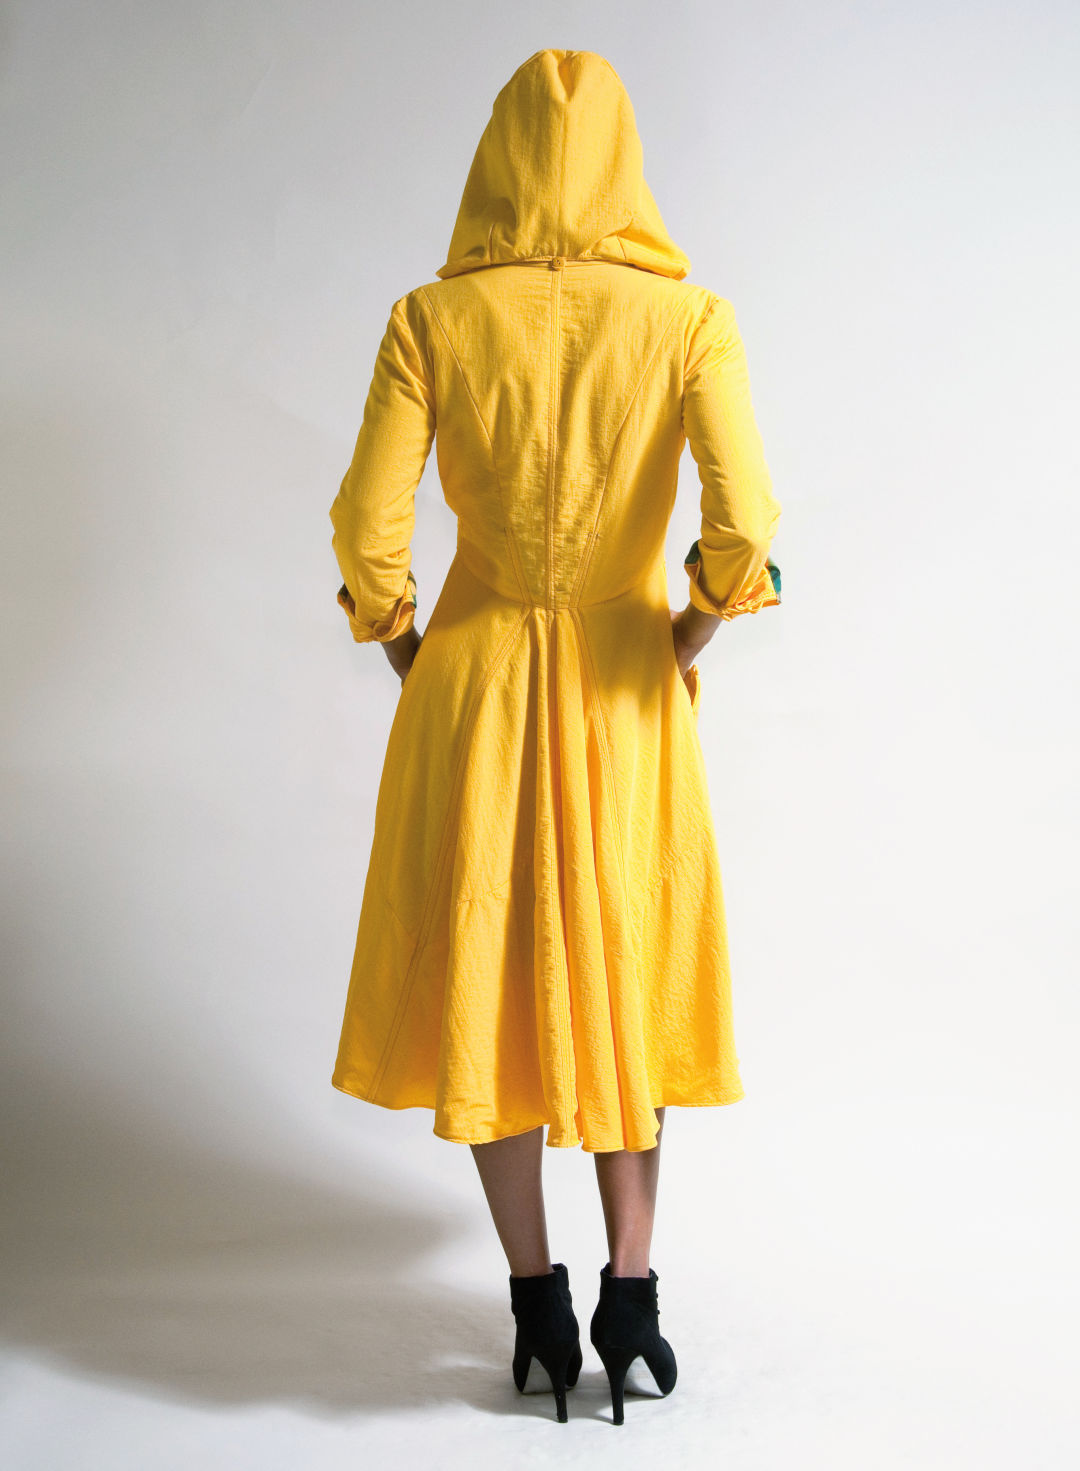 Raincoats – water repellent and windproof